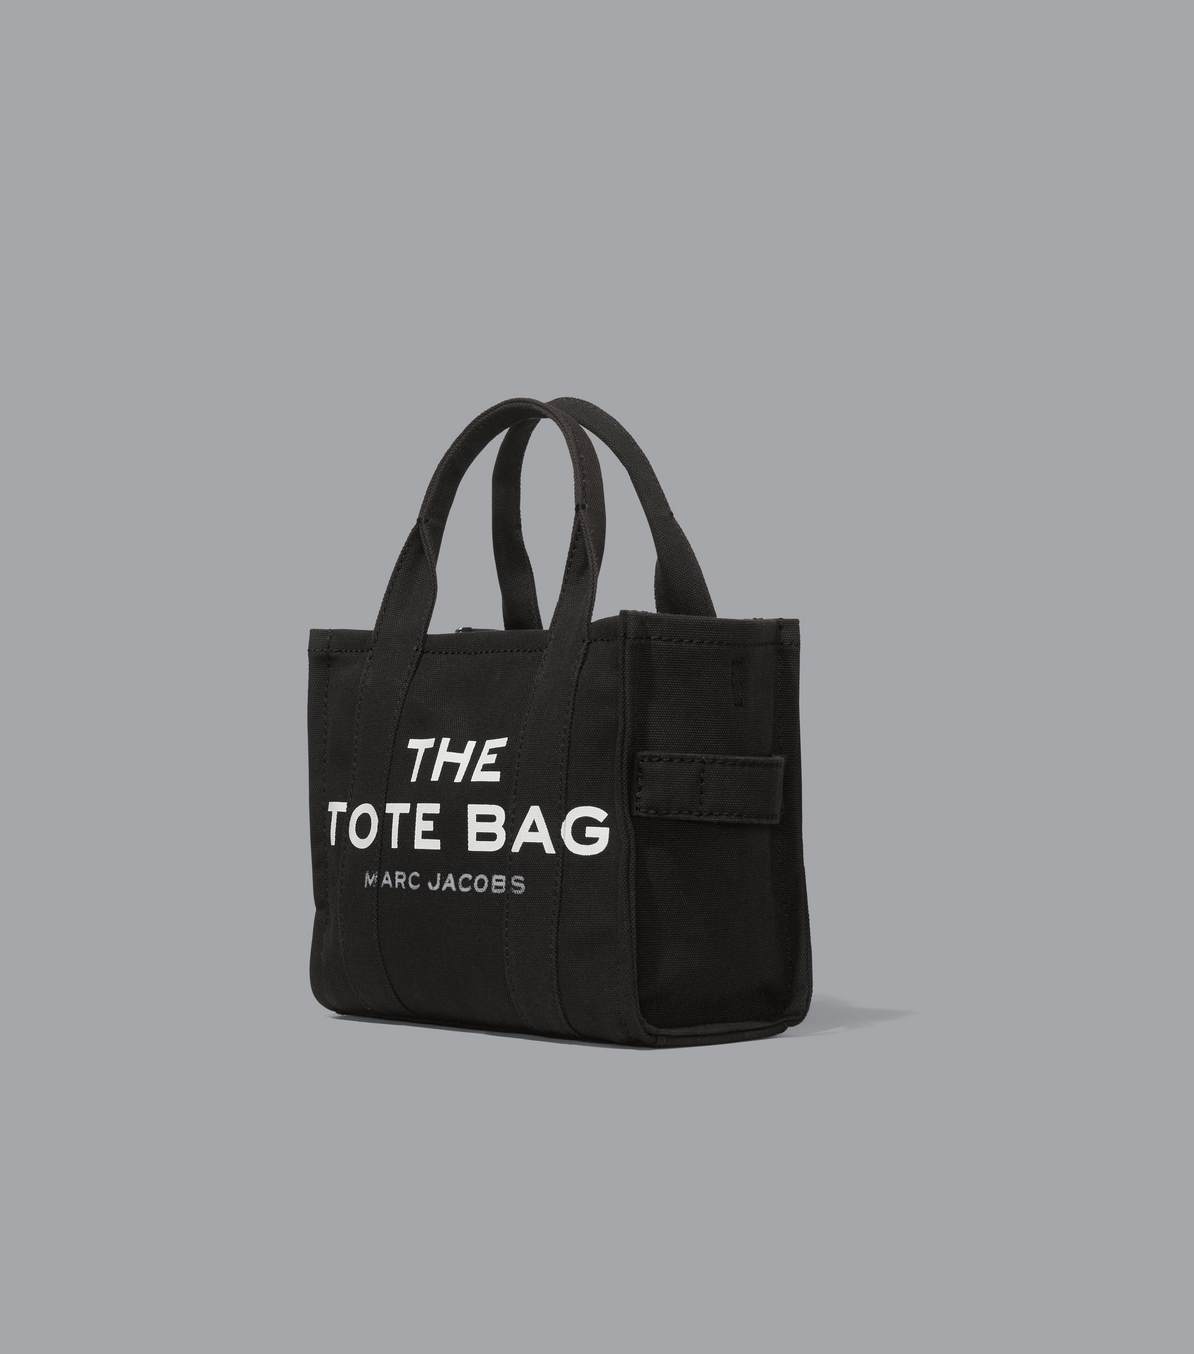 The Mini Tote Bag